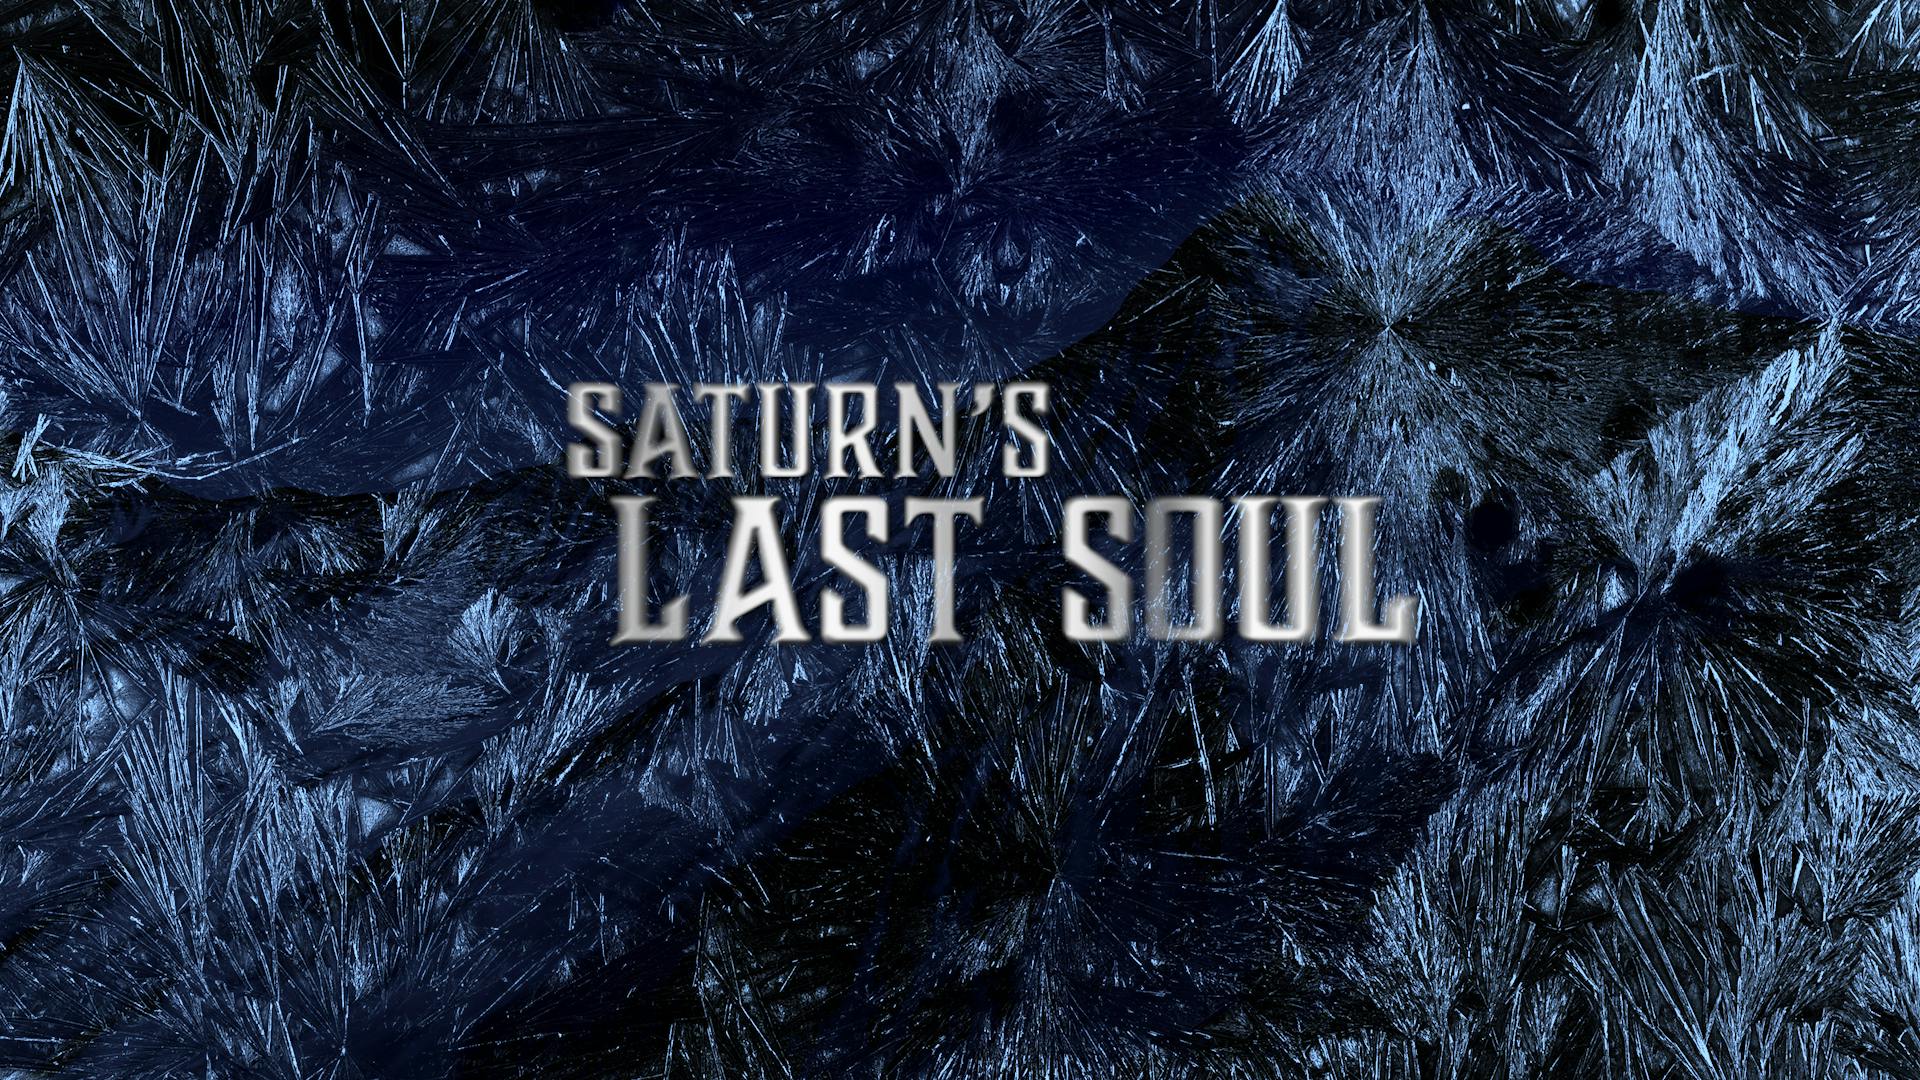 The Astroholic Explains Xmas Special 2019 – Saturn’s Last Soul